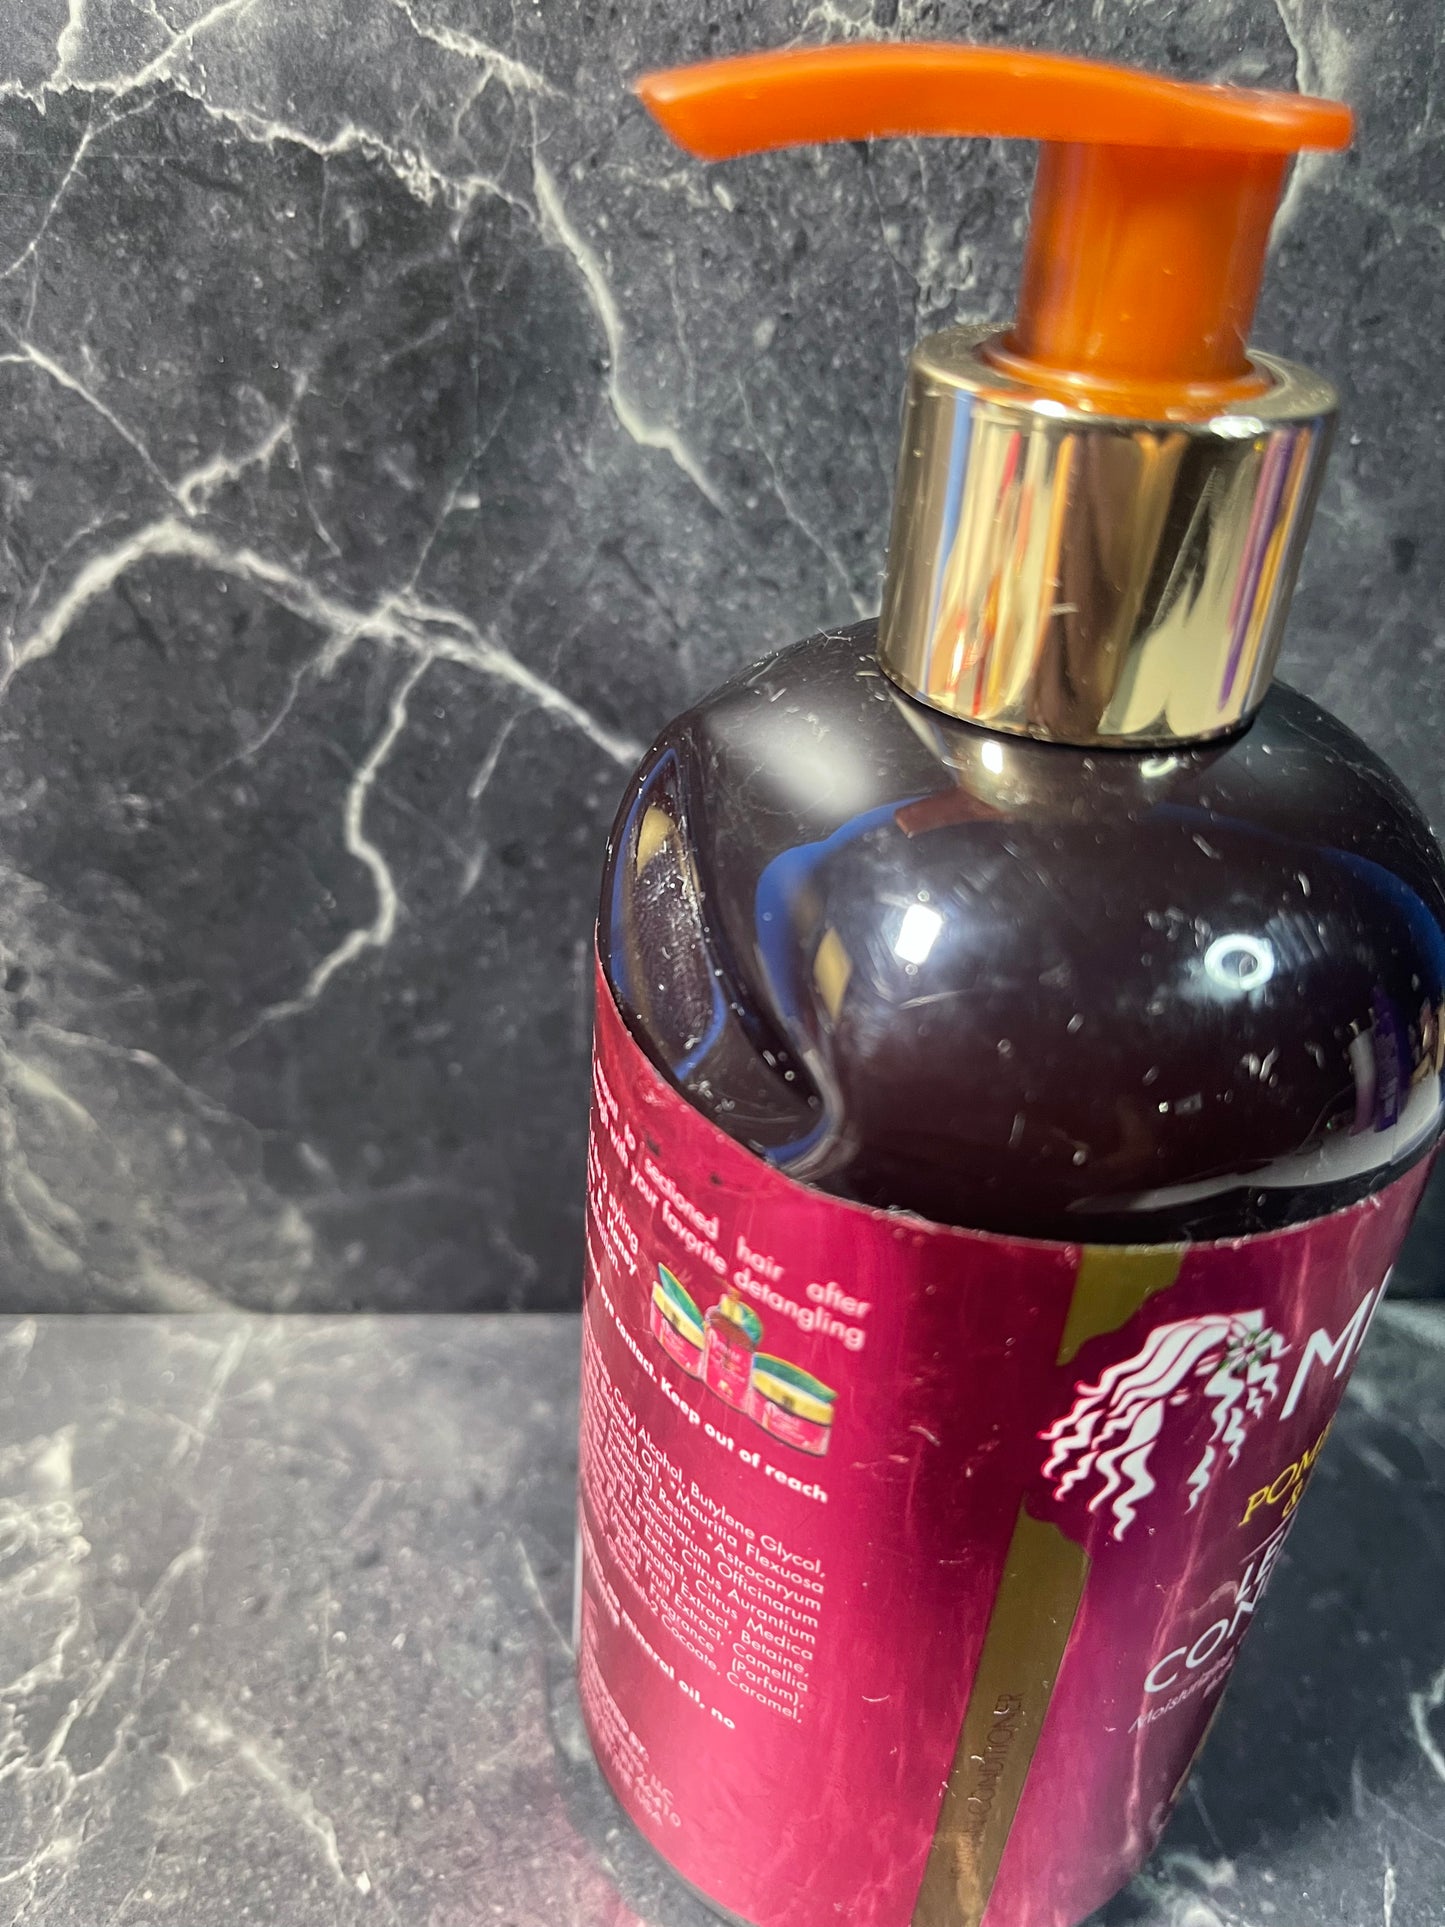 Mielle Organics Pomegranate & Honey Leave-In Conditioner, Moisturizing Curl 12oz